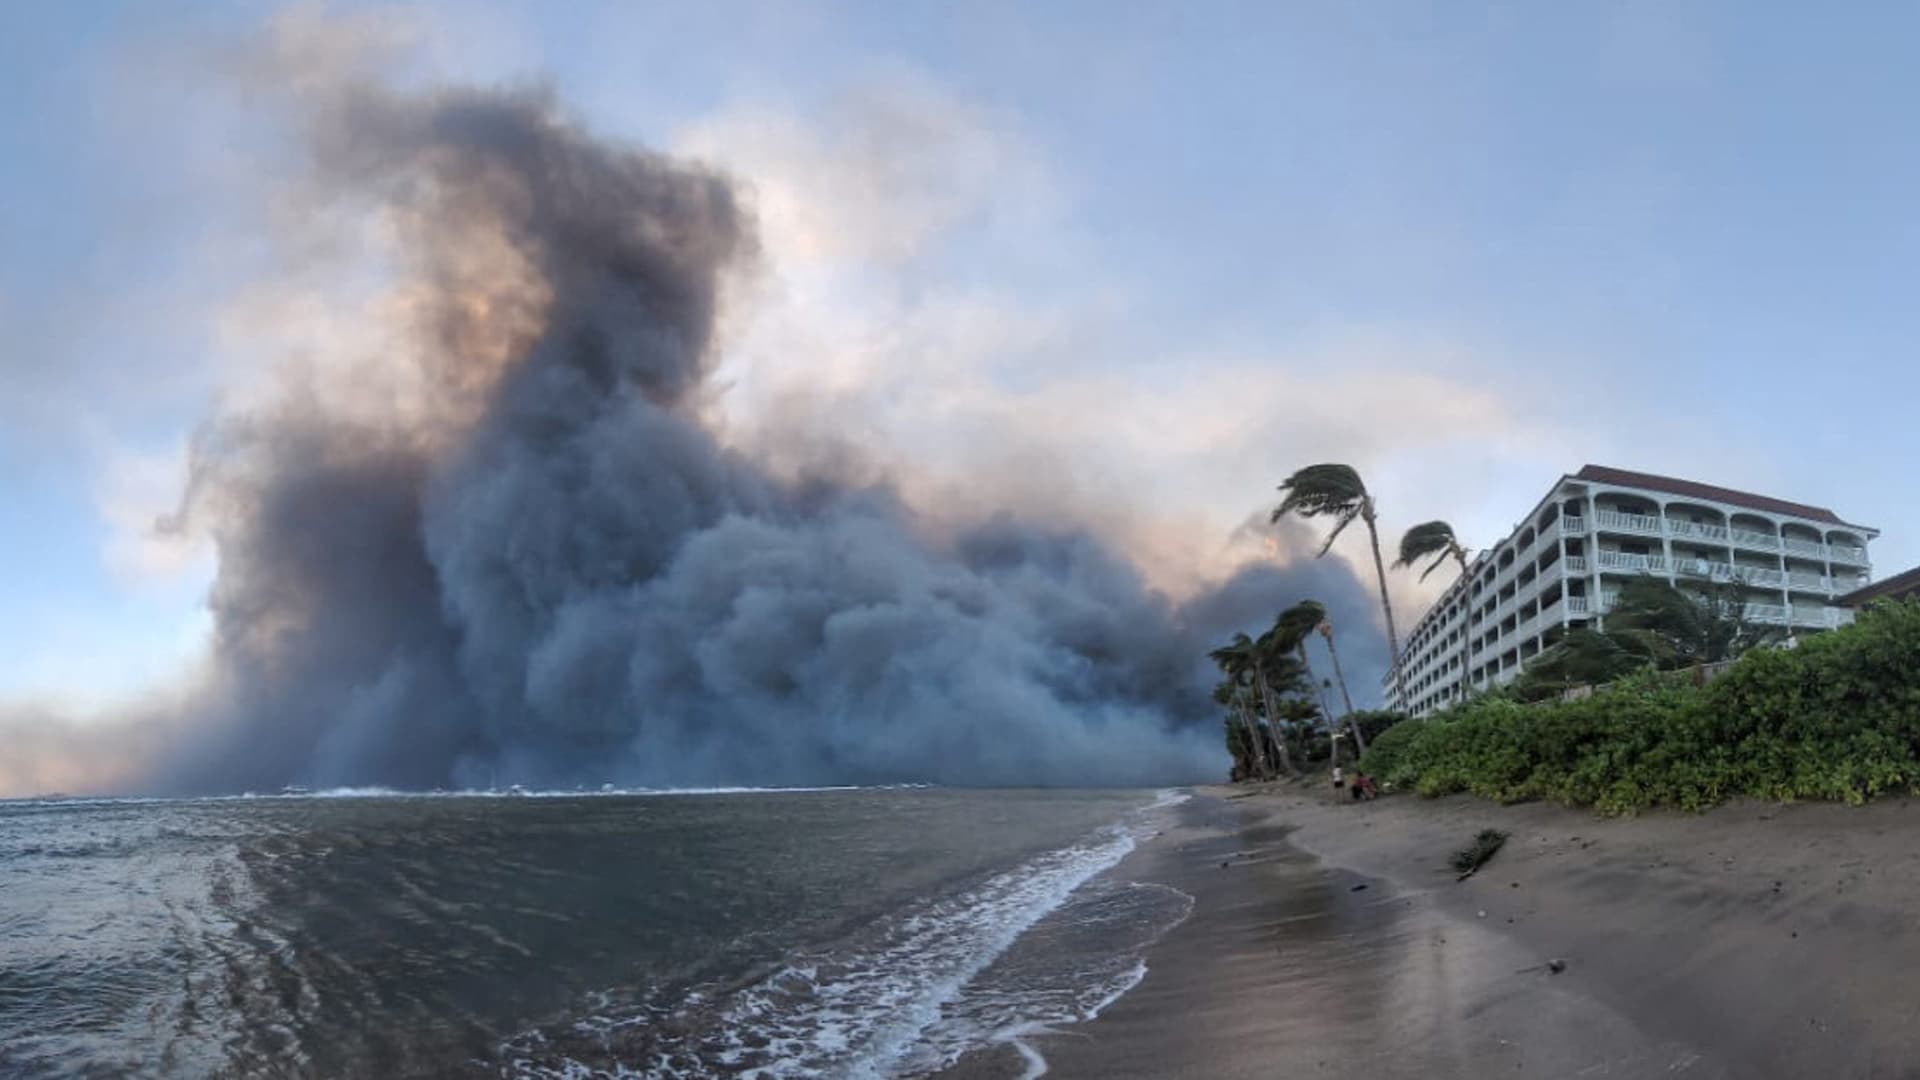 At least 6 killed as Maui wildfires spread, evacuations across Hawaii continue